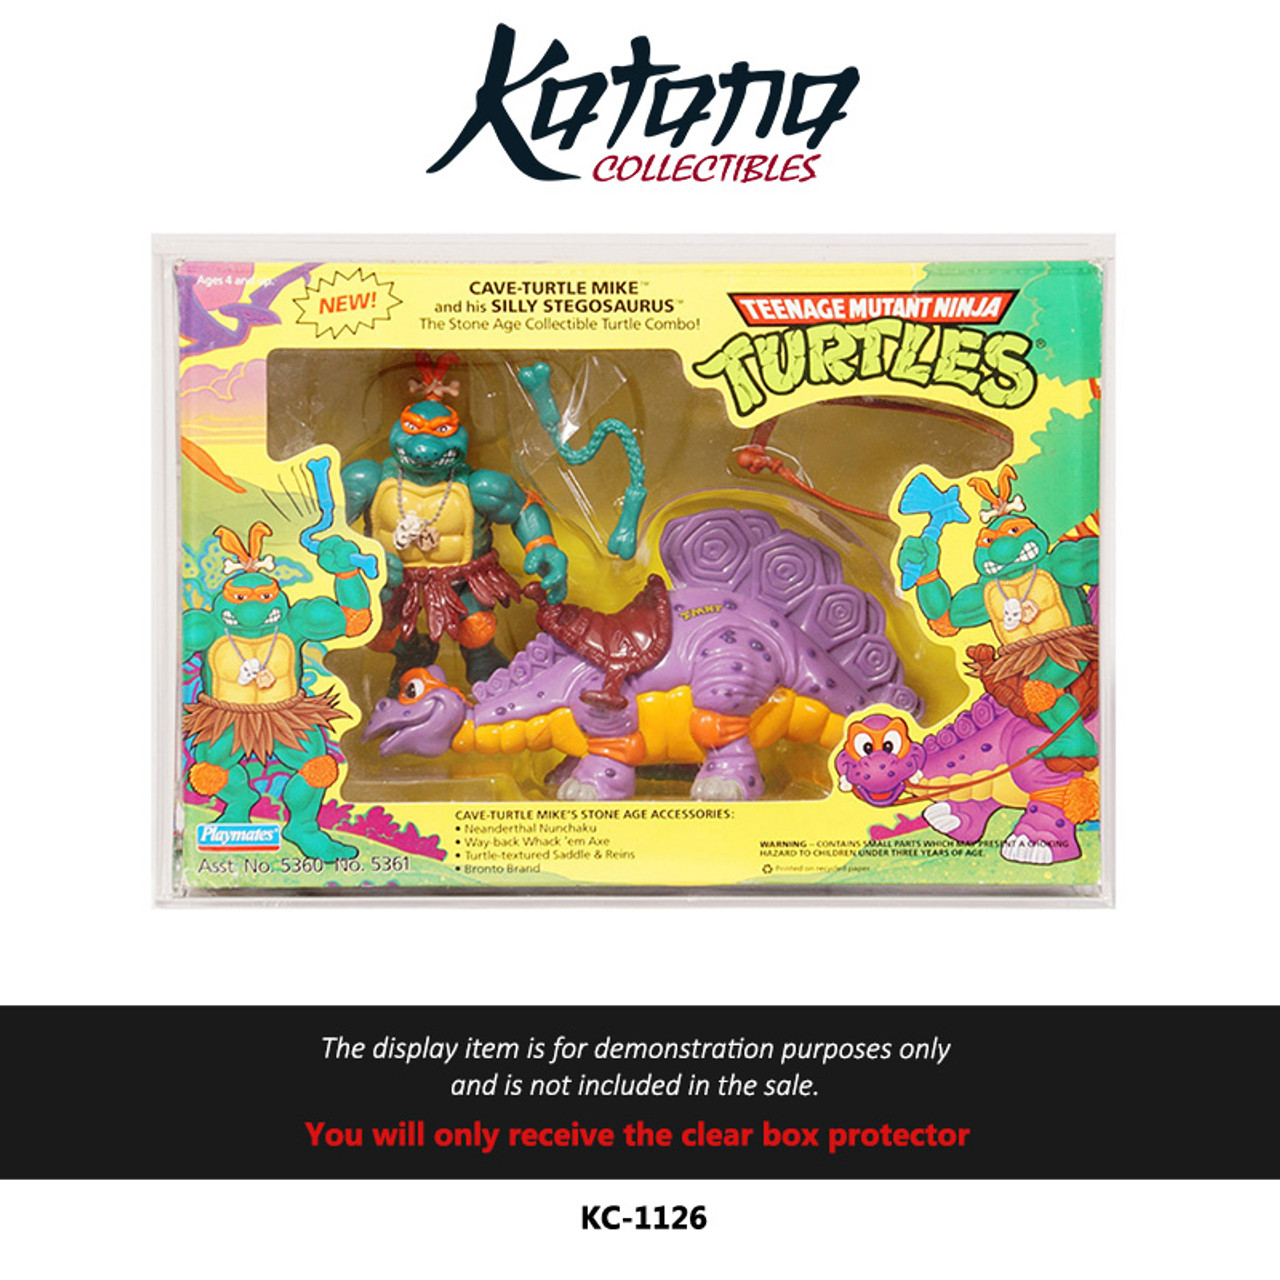 Katana Collectibles Protector For Playmates Teenage Mutant Ninja Turtles Cave Mike Figure